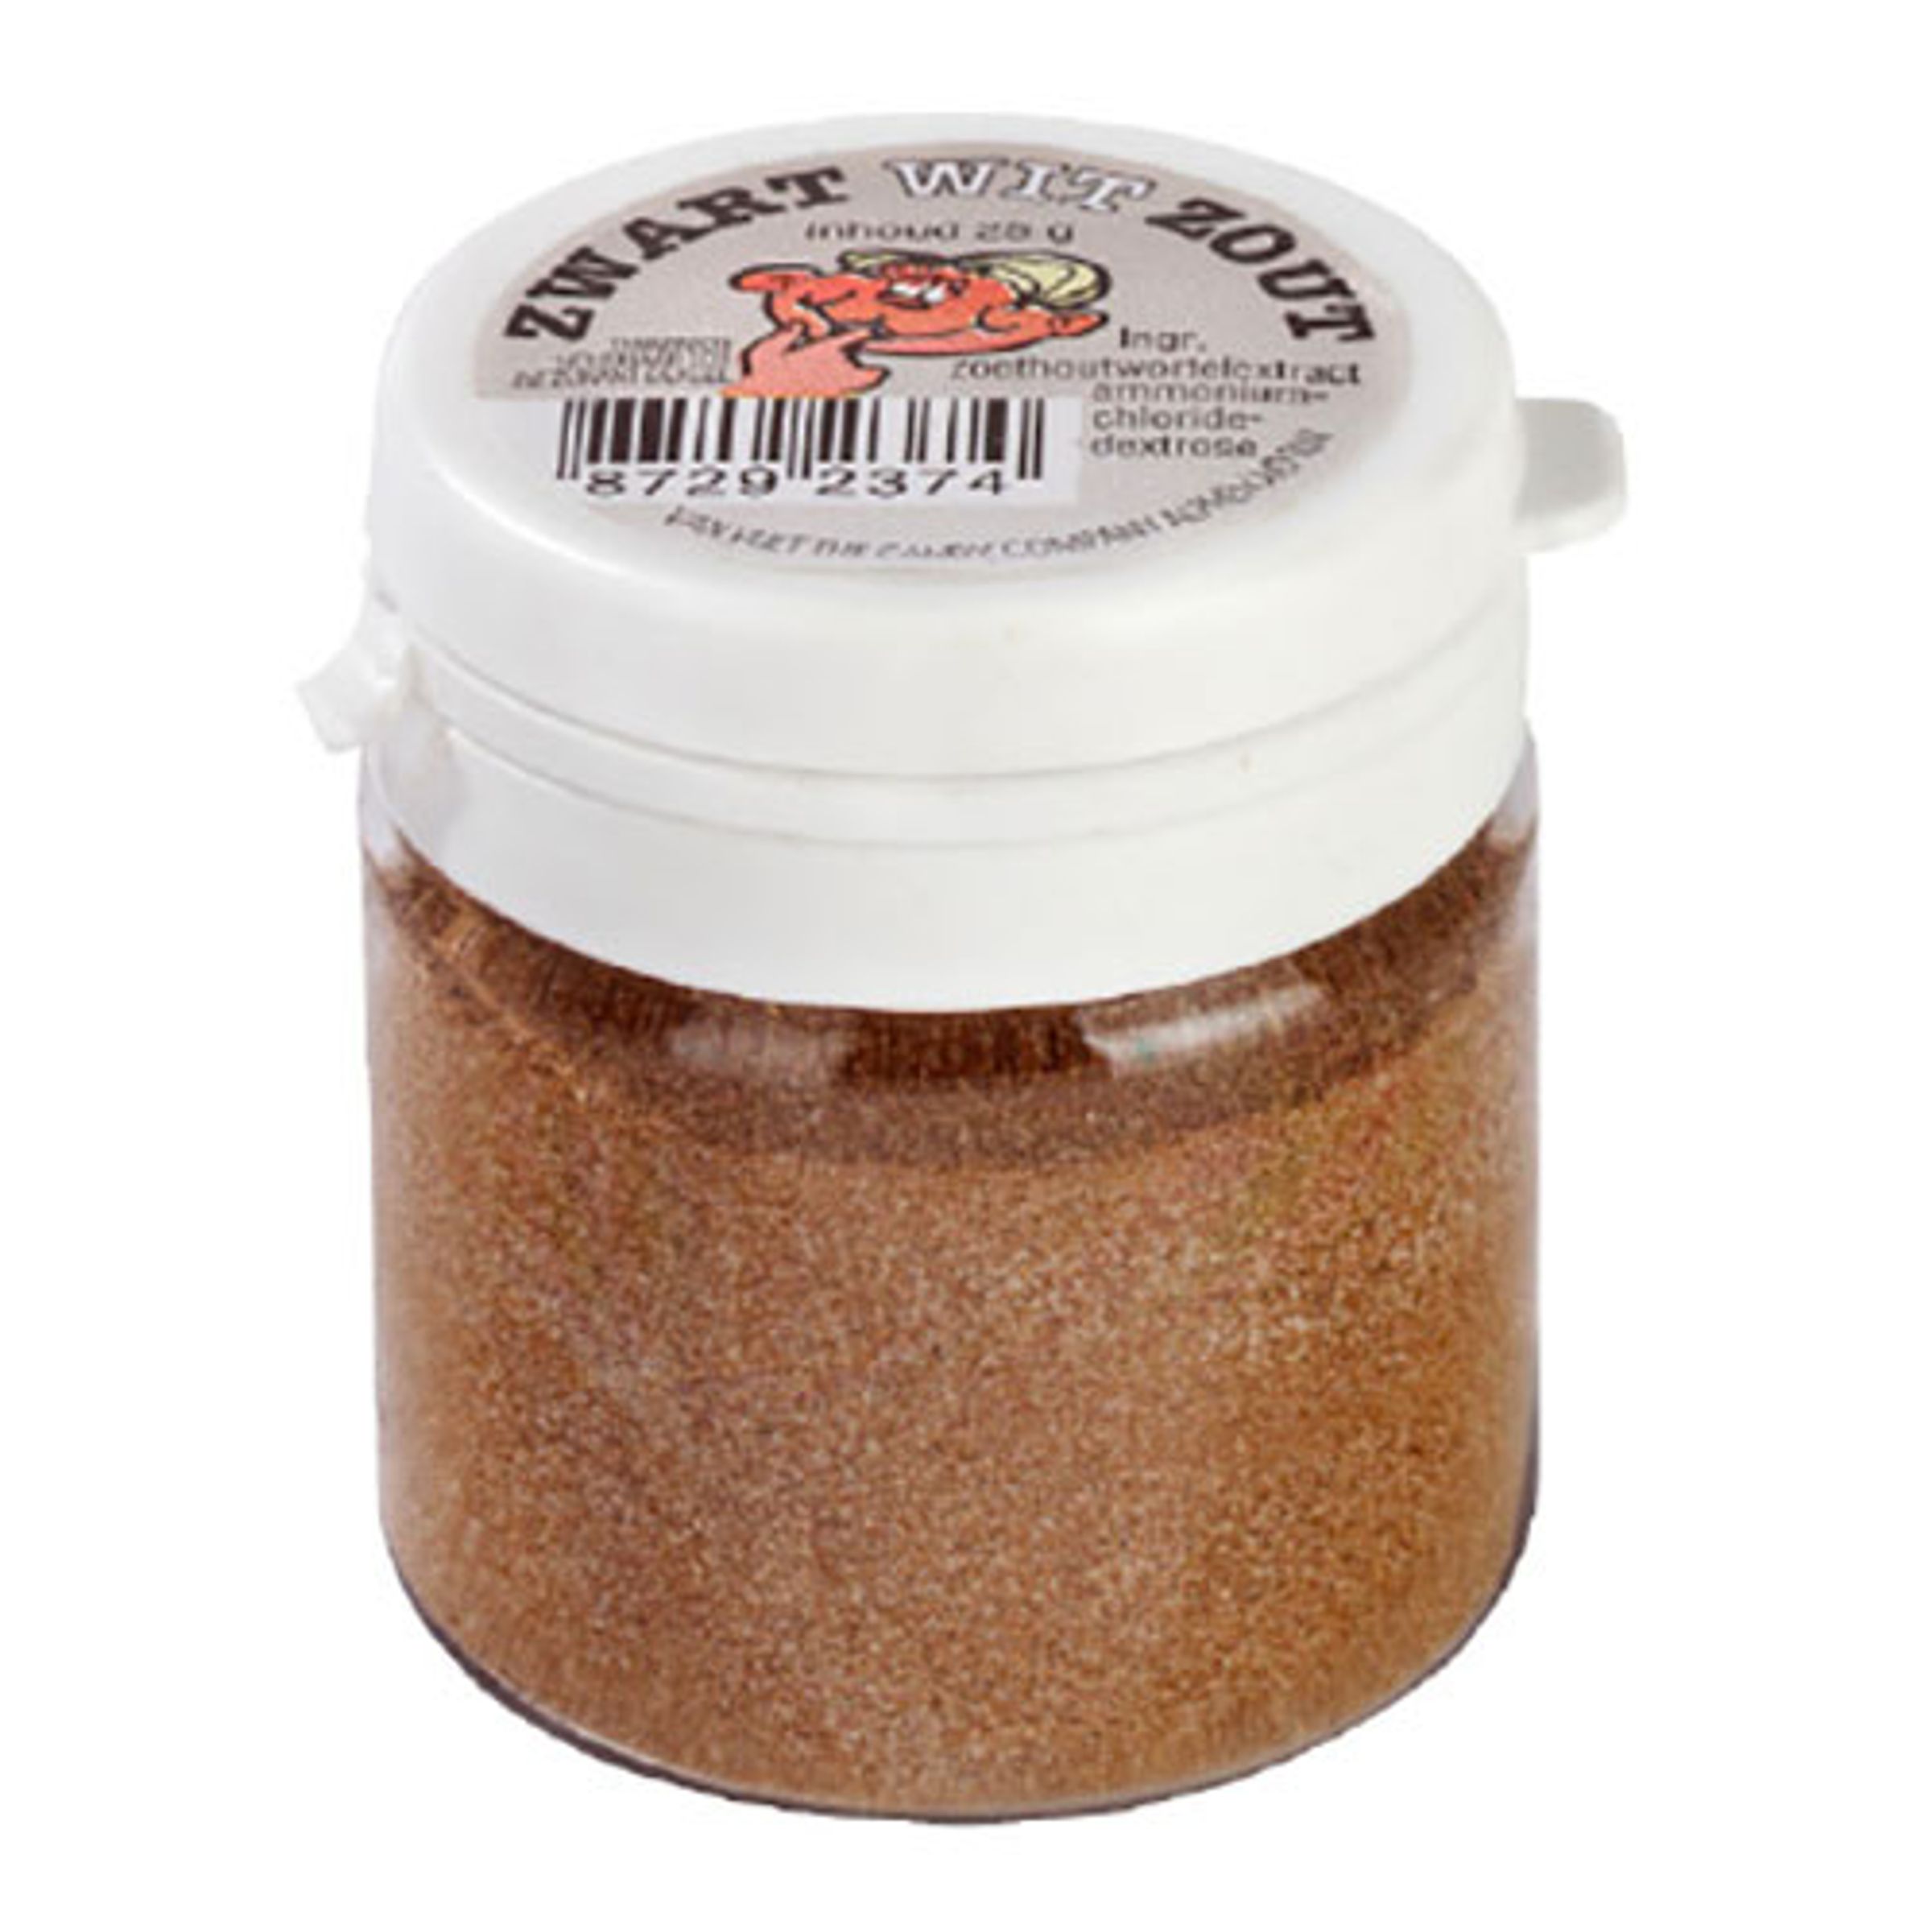 Salt Snuspulver - 25 gram